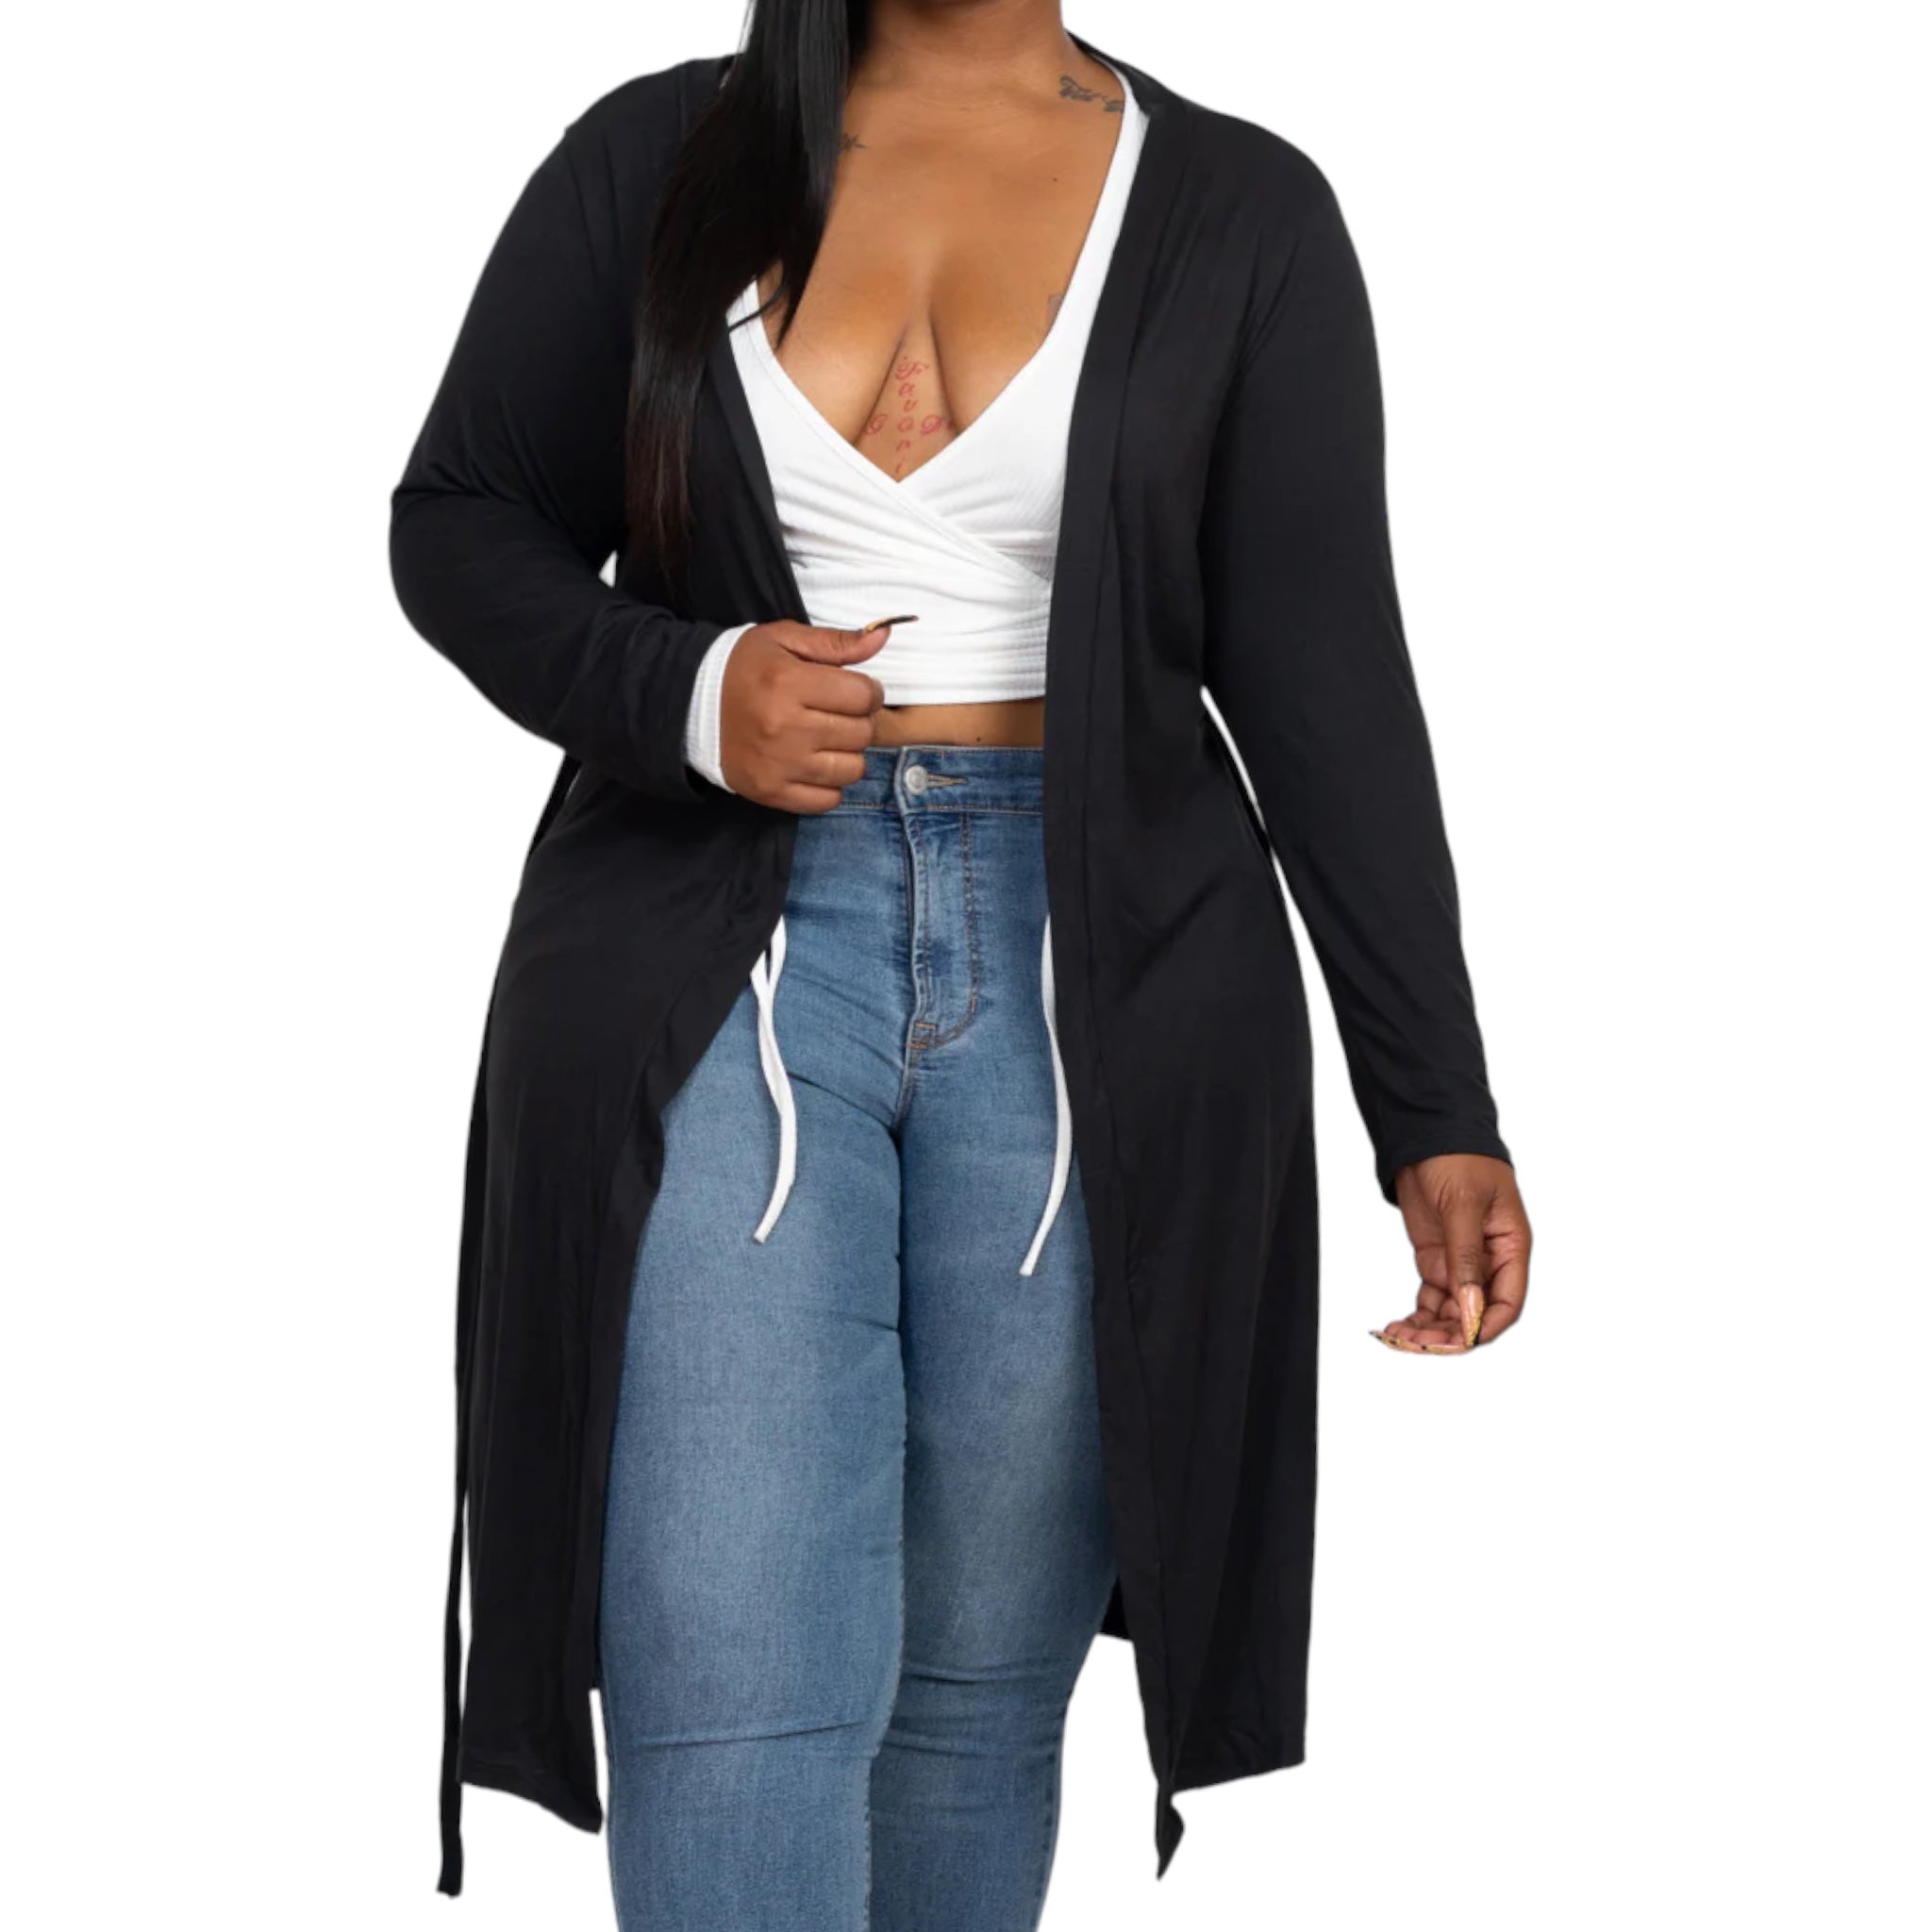 Women’s Plus Size Everyday Black Cardigan - Fabulously Dressed Boutique 